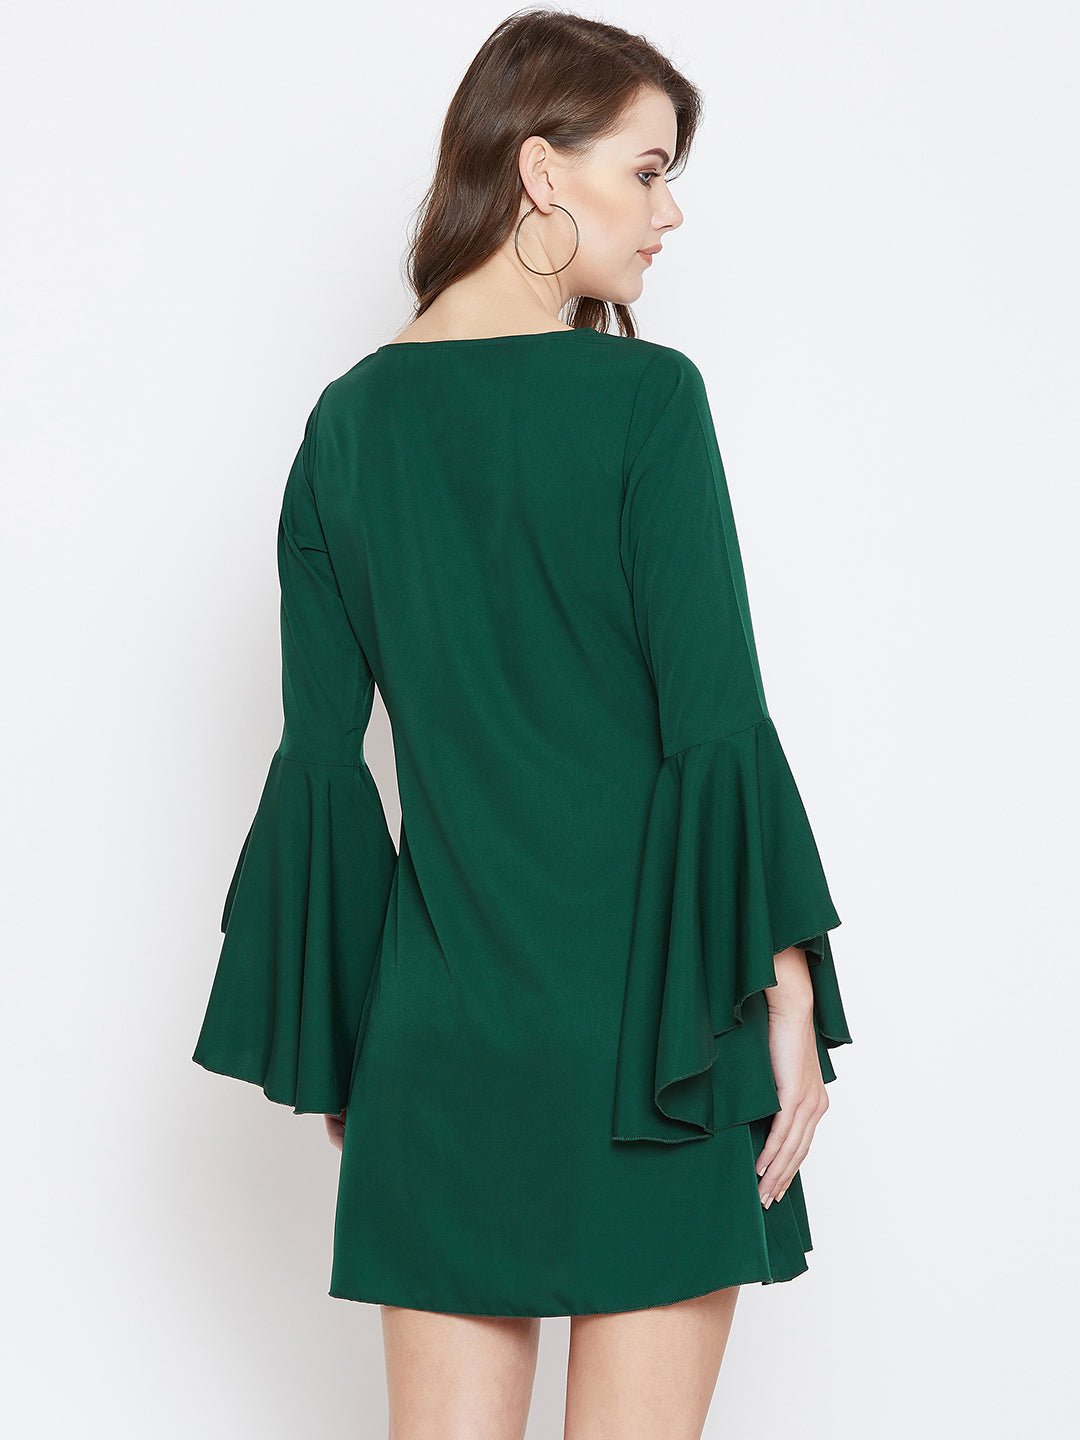 Folk Republic Women Solid Green Round Neck Bell Sleeves A-Line Mini Dress - #folk republic#